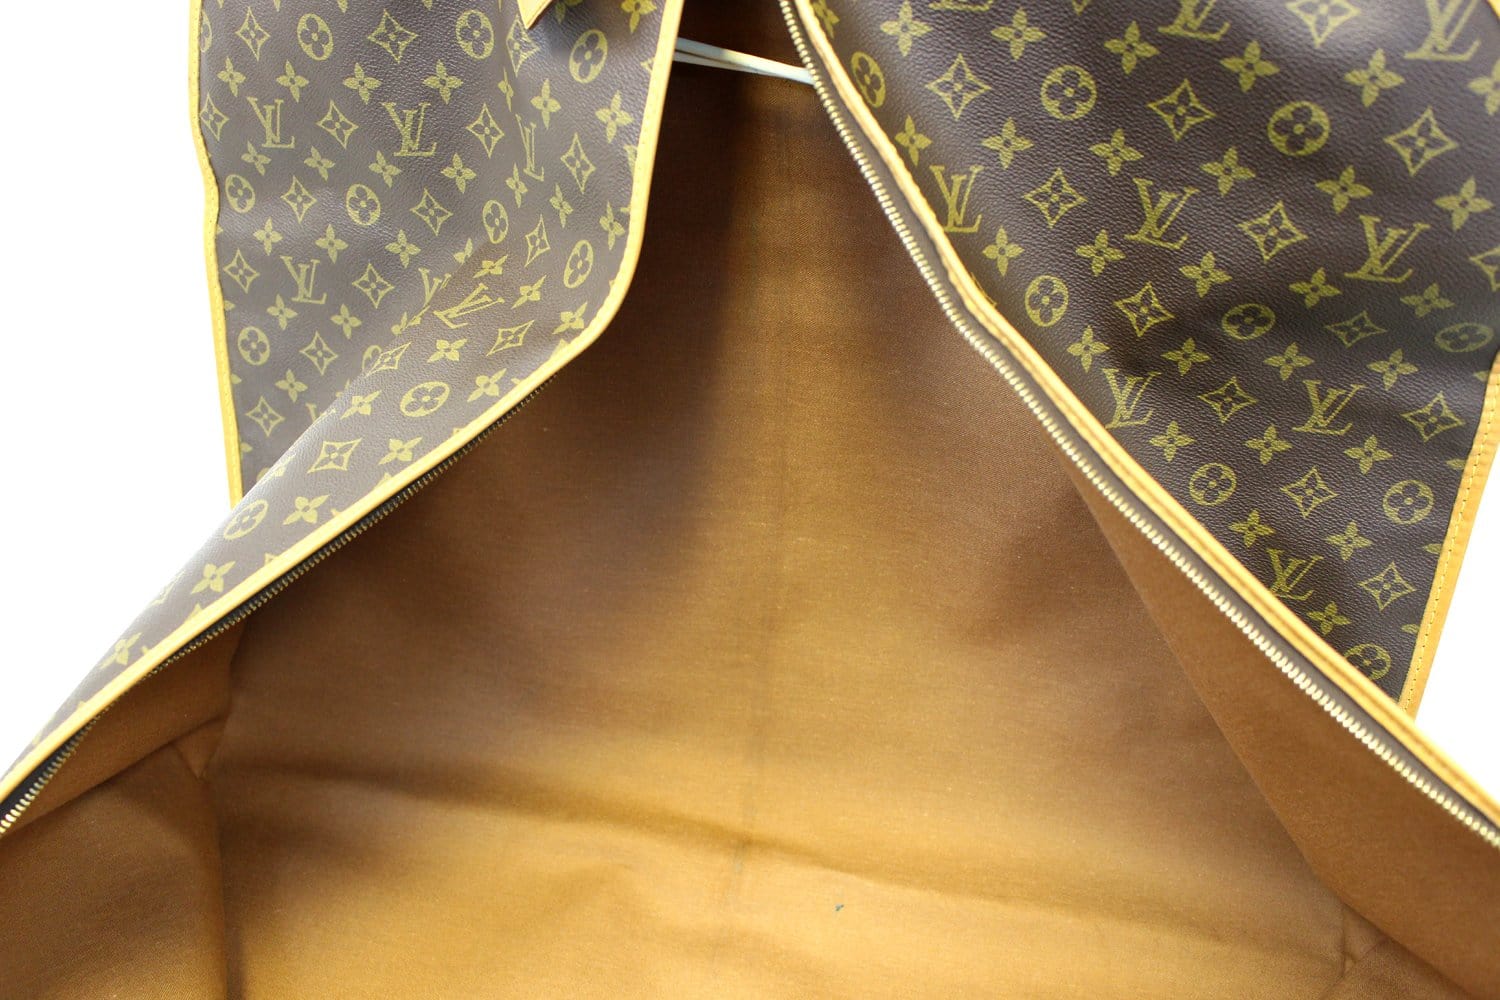 Sold at Auction: Louis Vuitton, LOUIS VUITTON garment cover, coll. 2008.